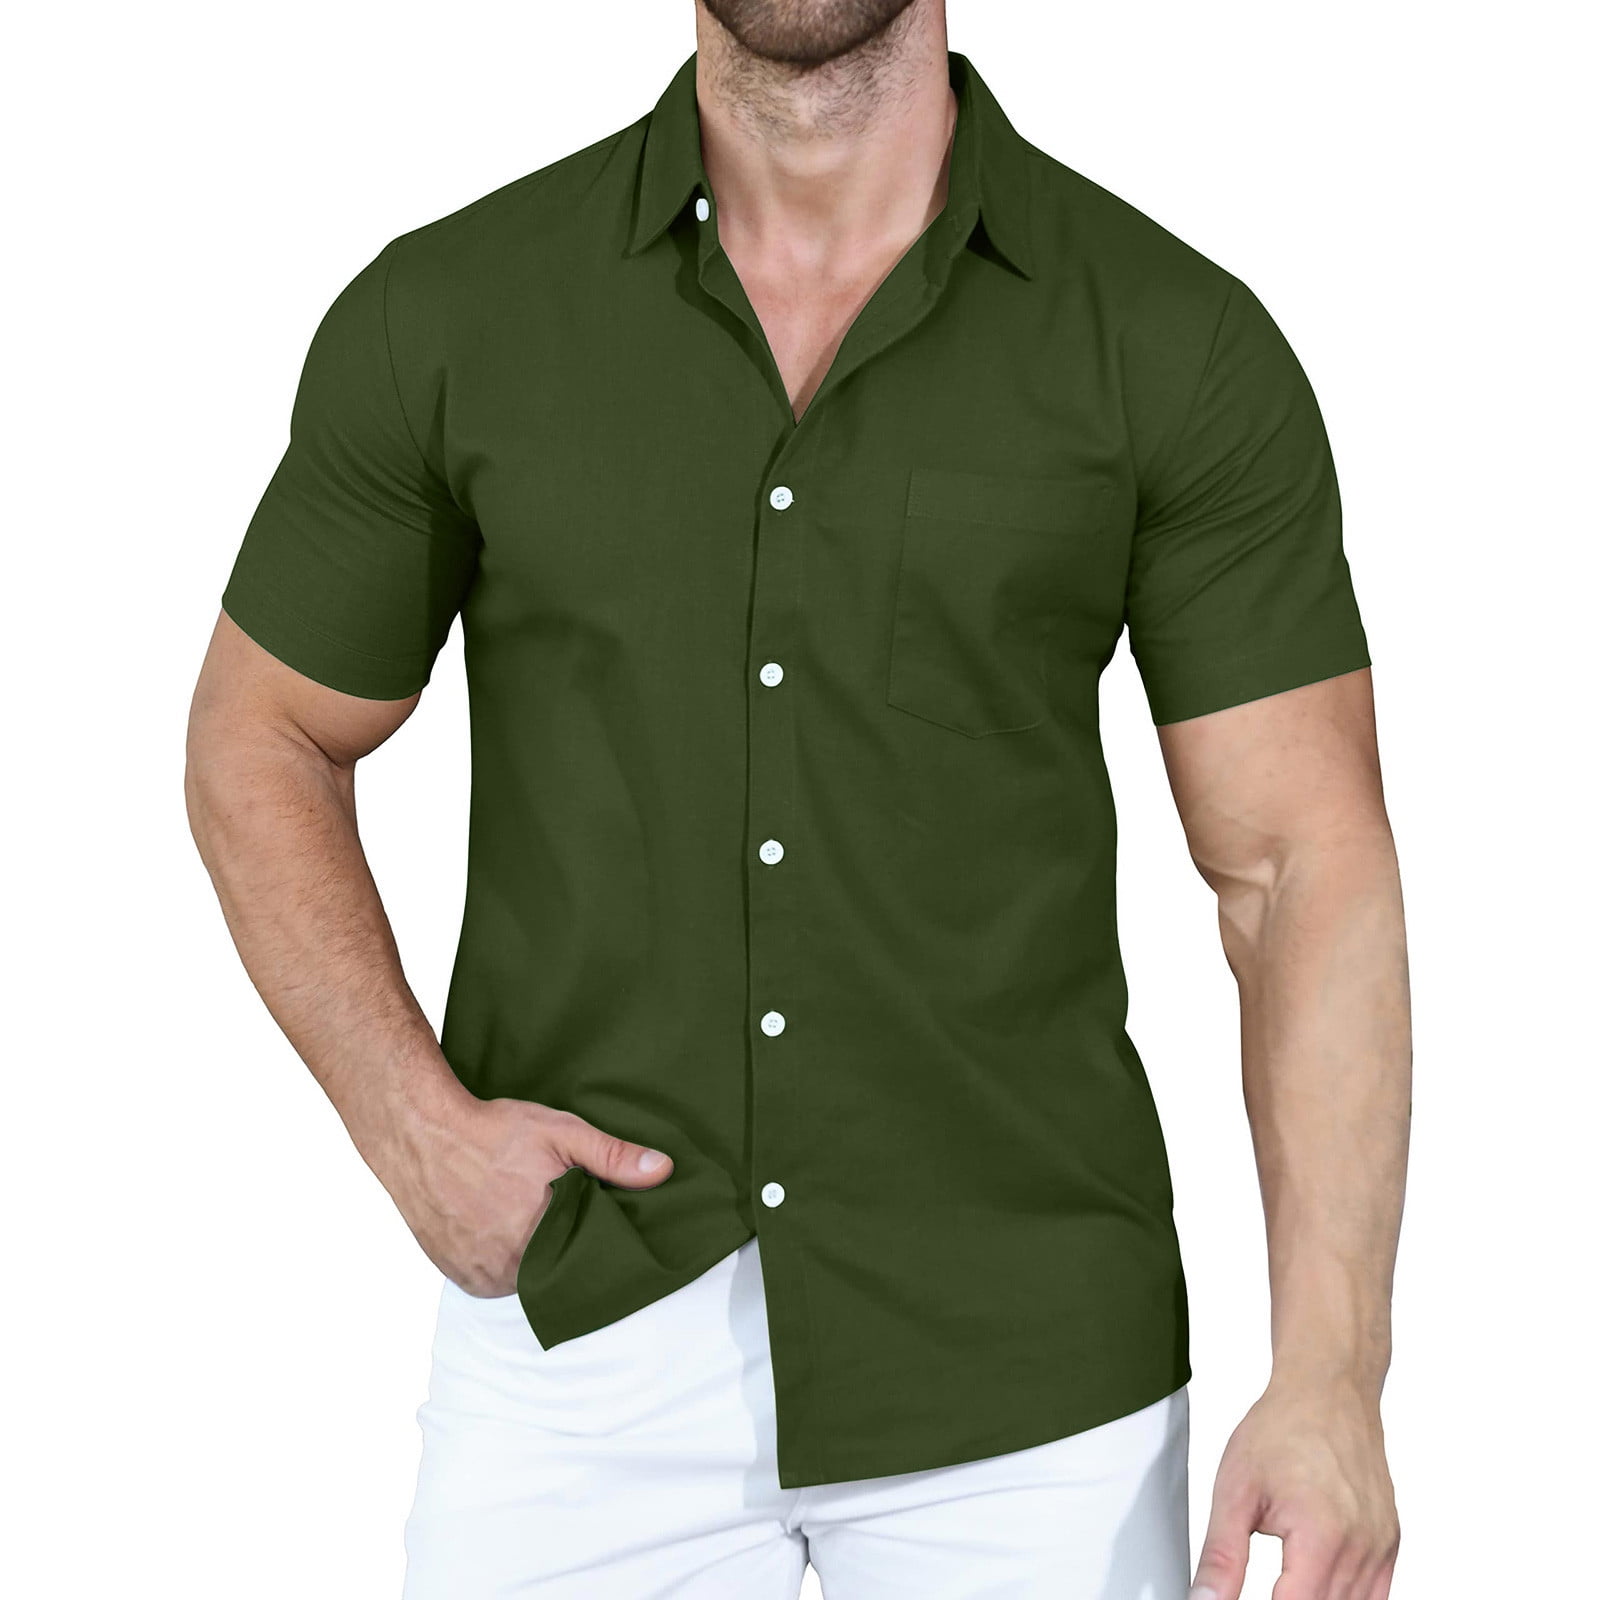 YYDGH Mens Dress Shirts Short Sleeve Button Up Shirts Business Casual  Button Down Shirt Green S